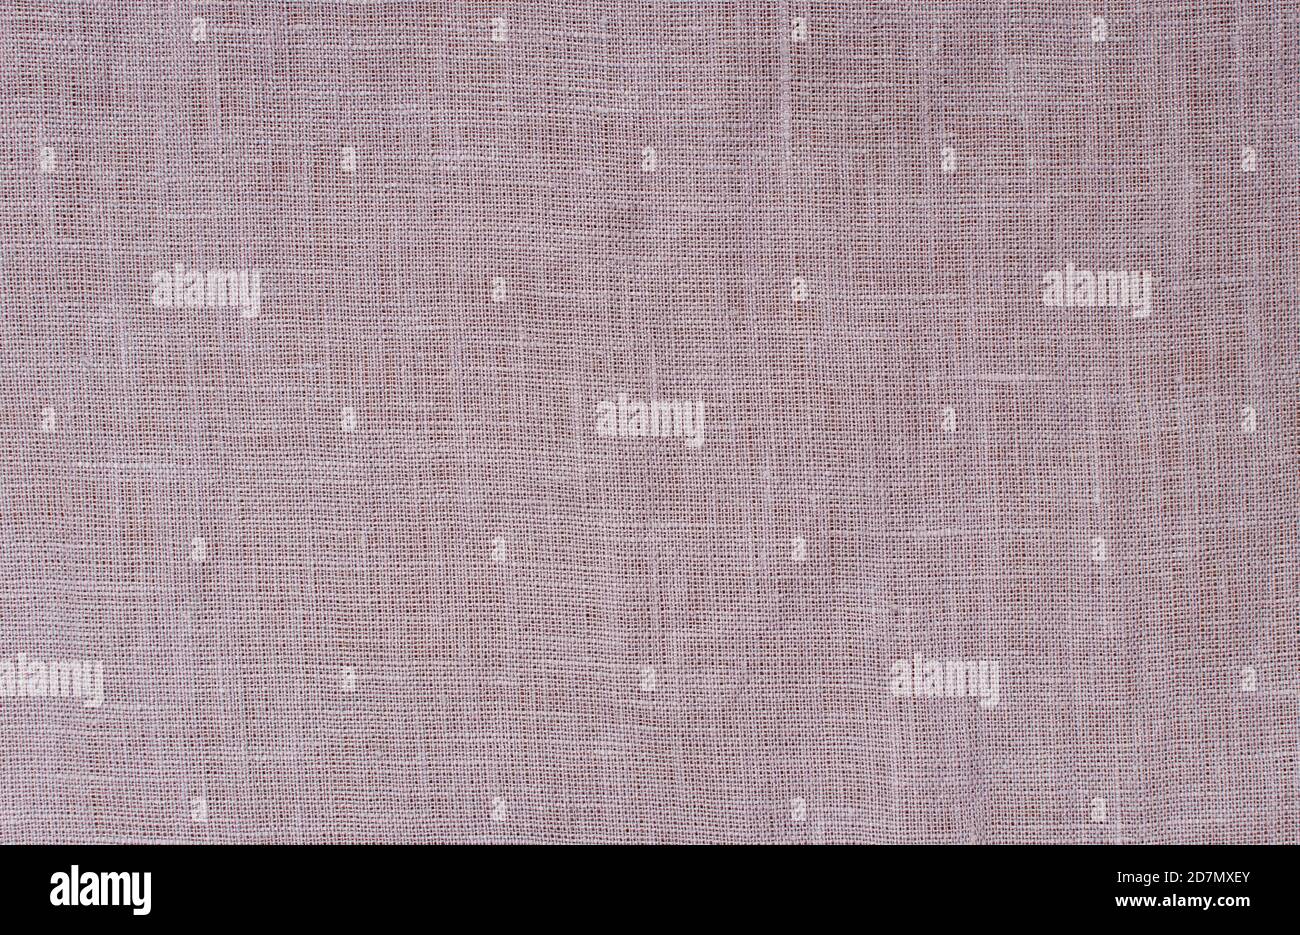 Pale pink breezy linen shirt fabric texture swatch Stock Photo